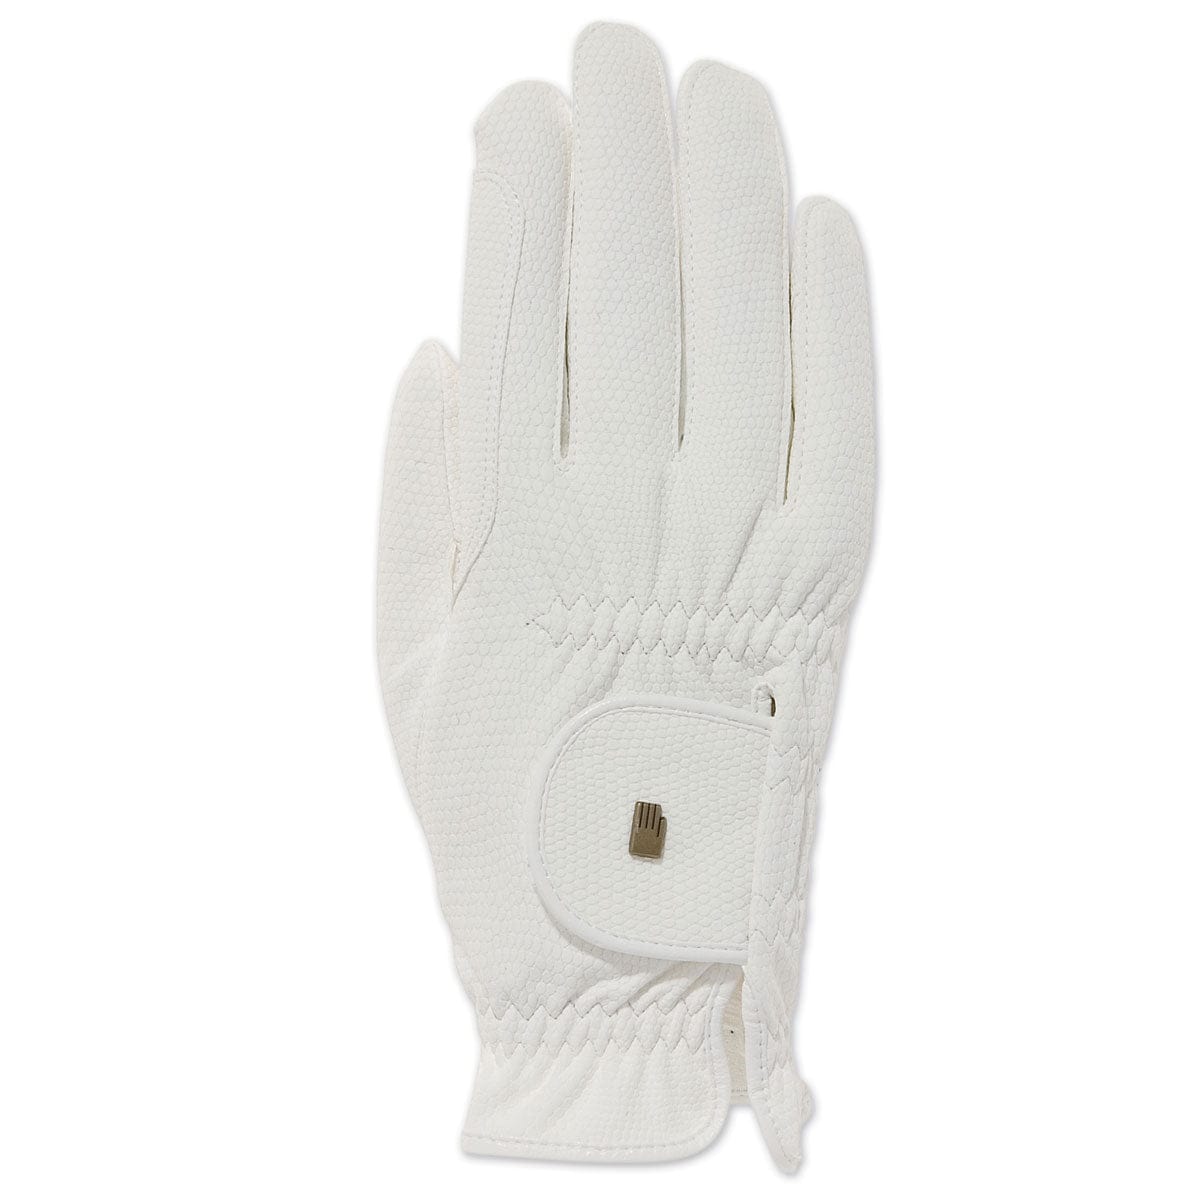 Roeckl Chester Grip Gloves - White